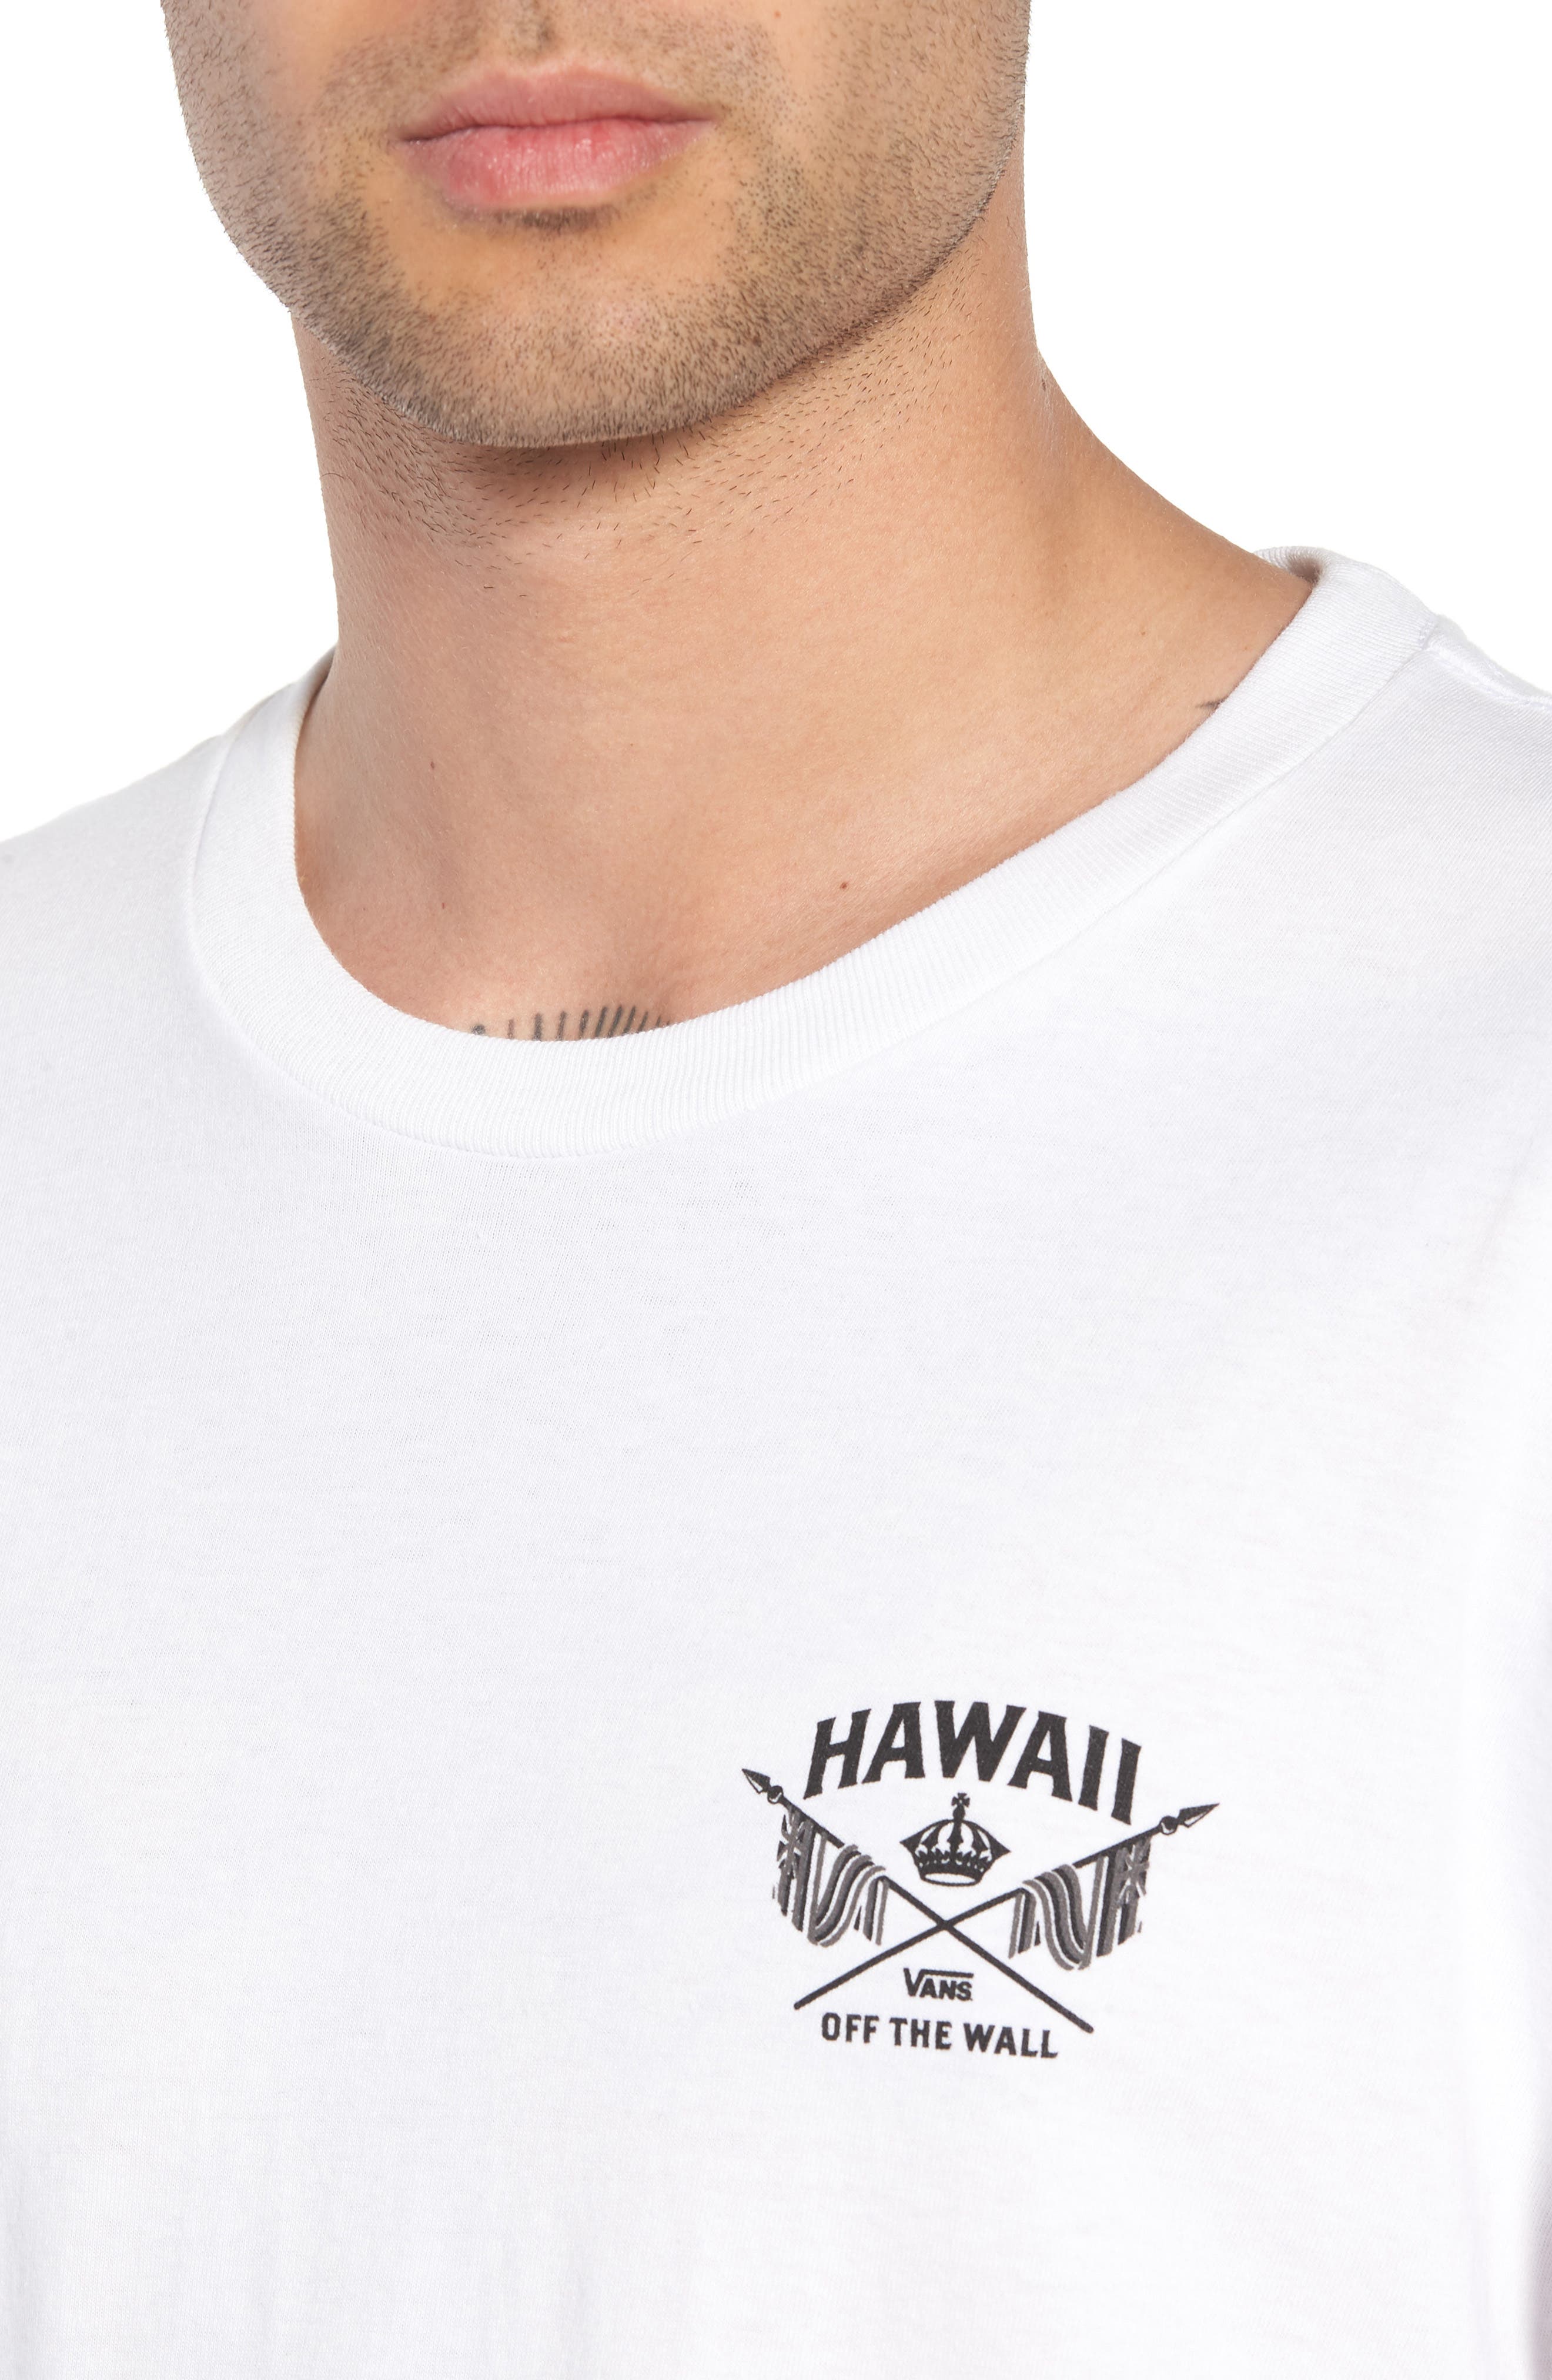 vans hawaii t shirt